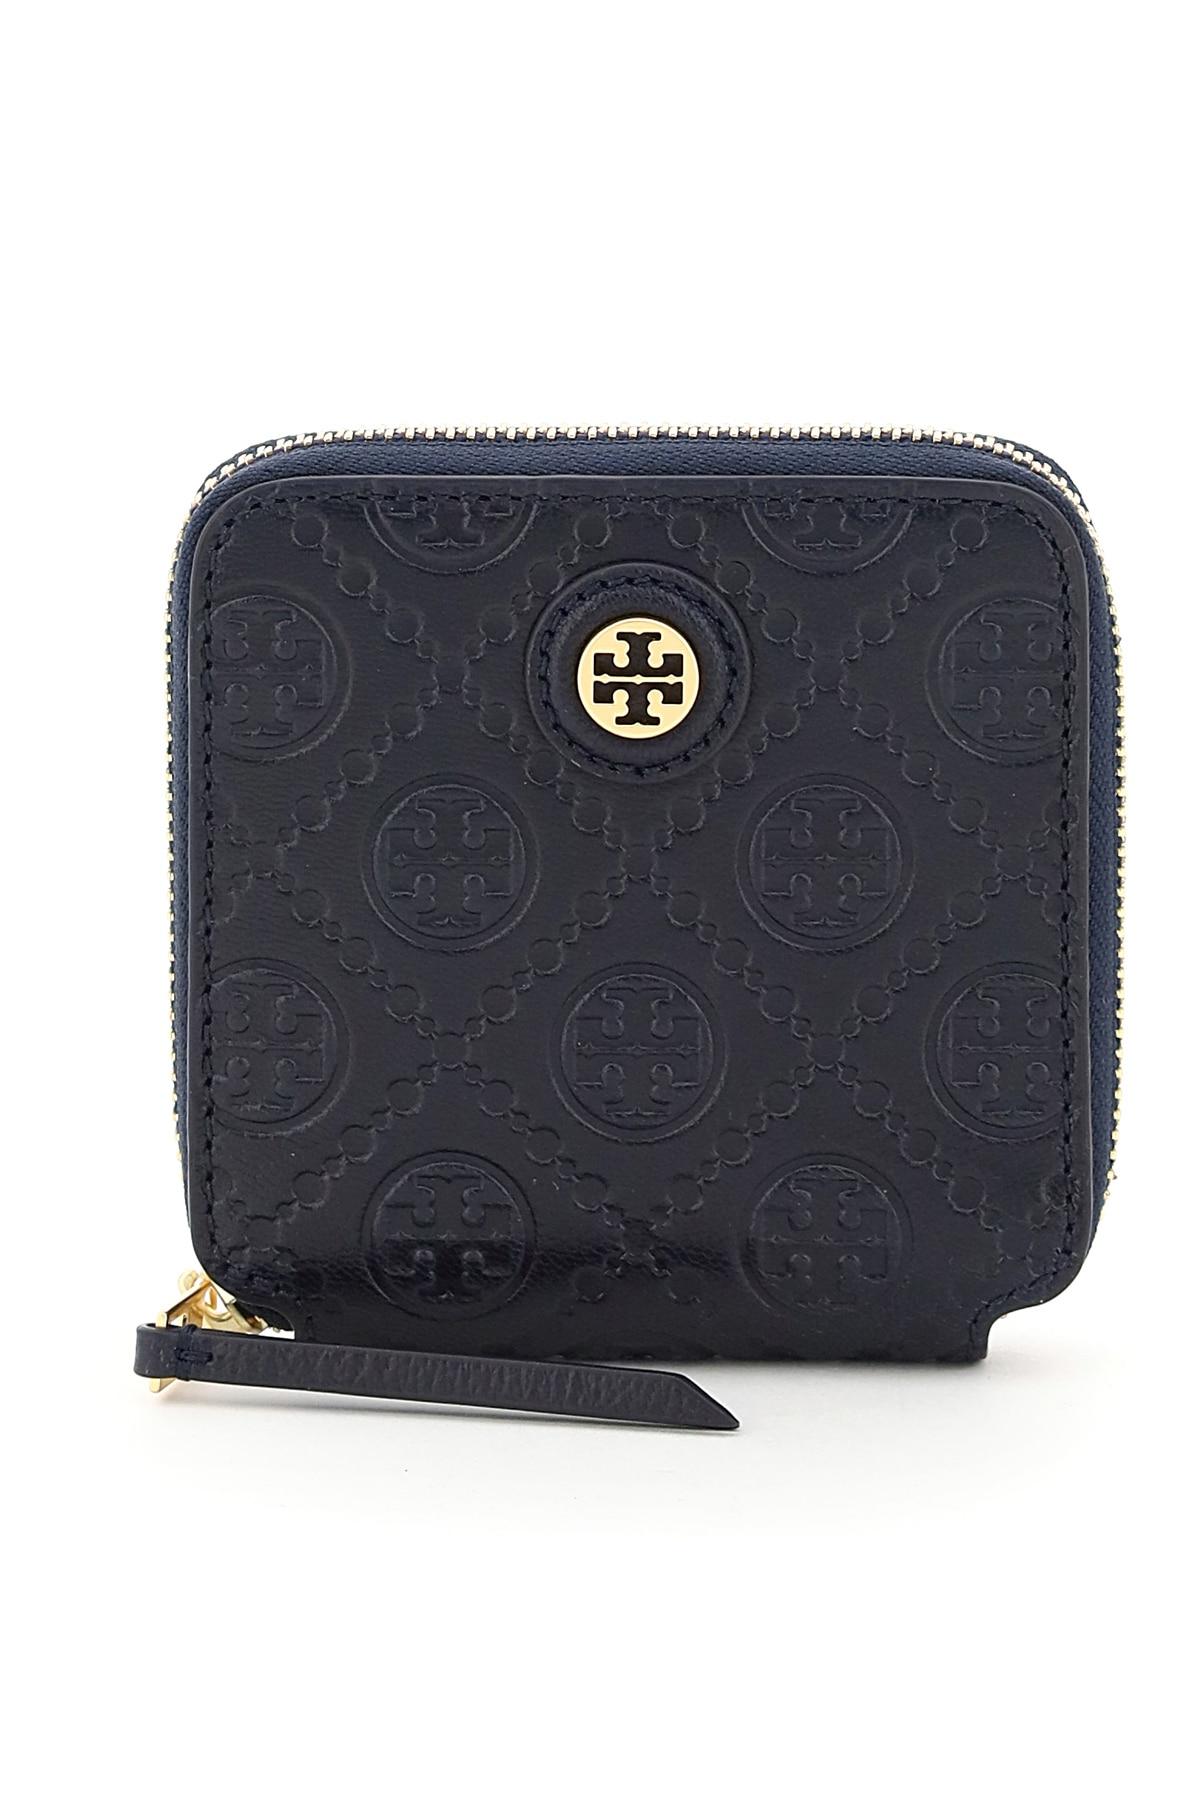 Tory Burch T Monogram Leather Bi-fold Wallet in Midnight (Blue) - Lyst